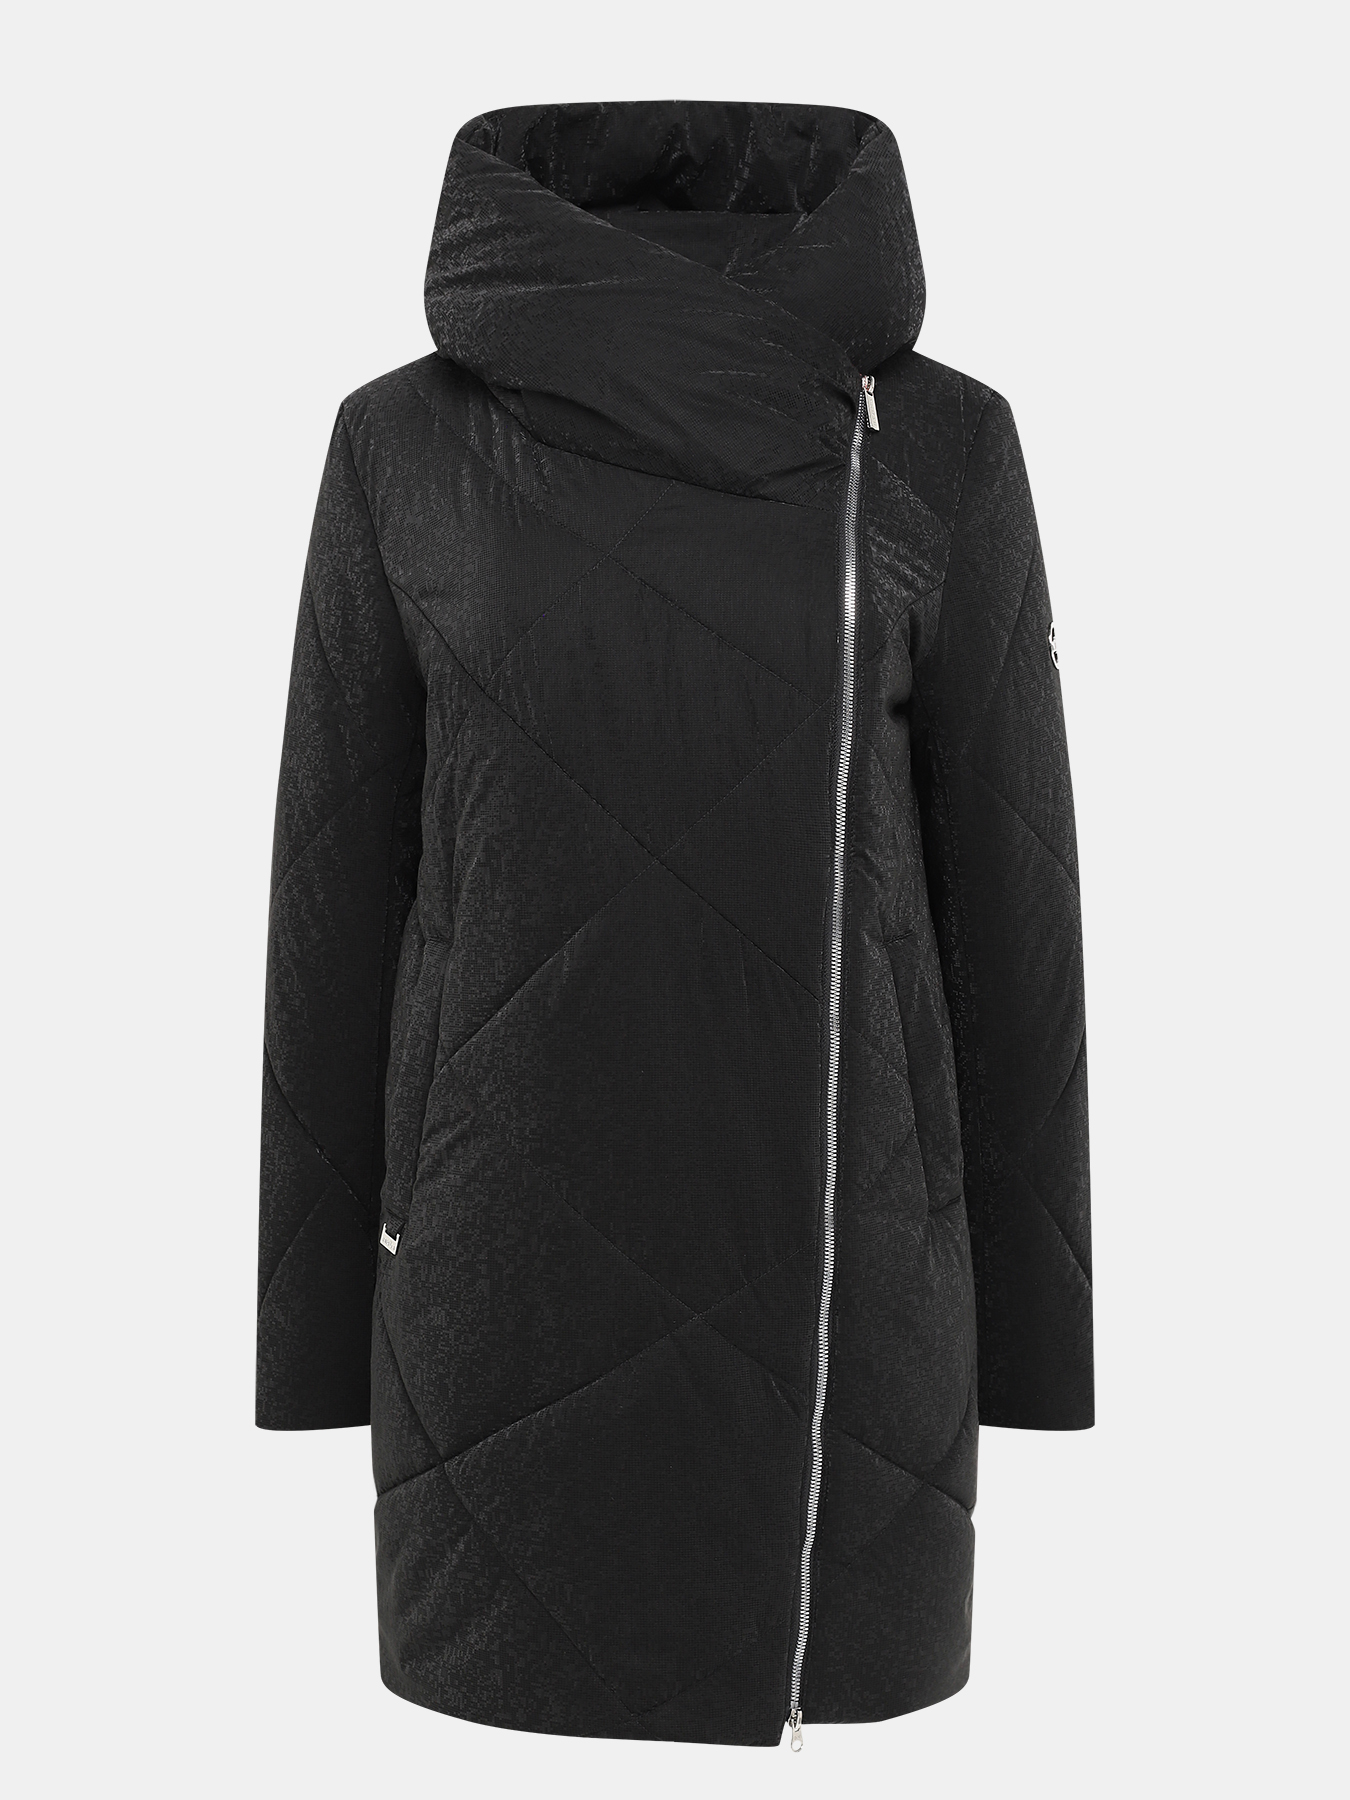 Пальто зимнее Maritta 433524-023, цвет черный, размер 50